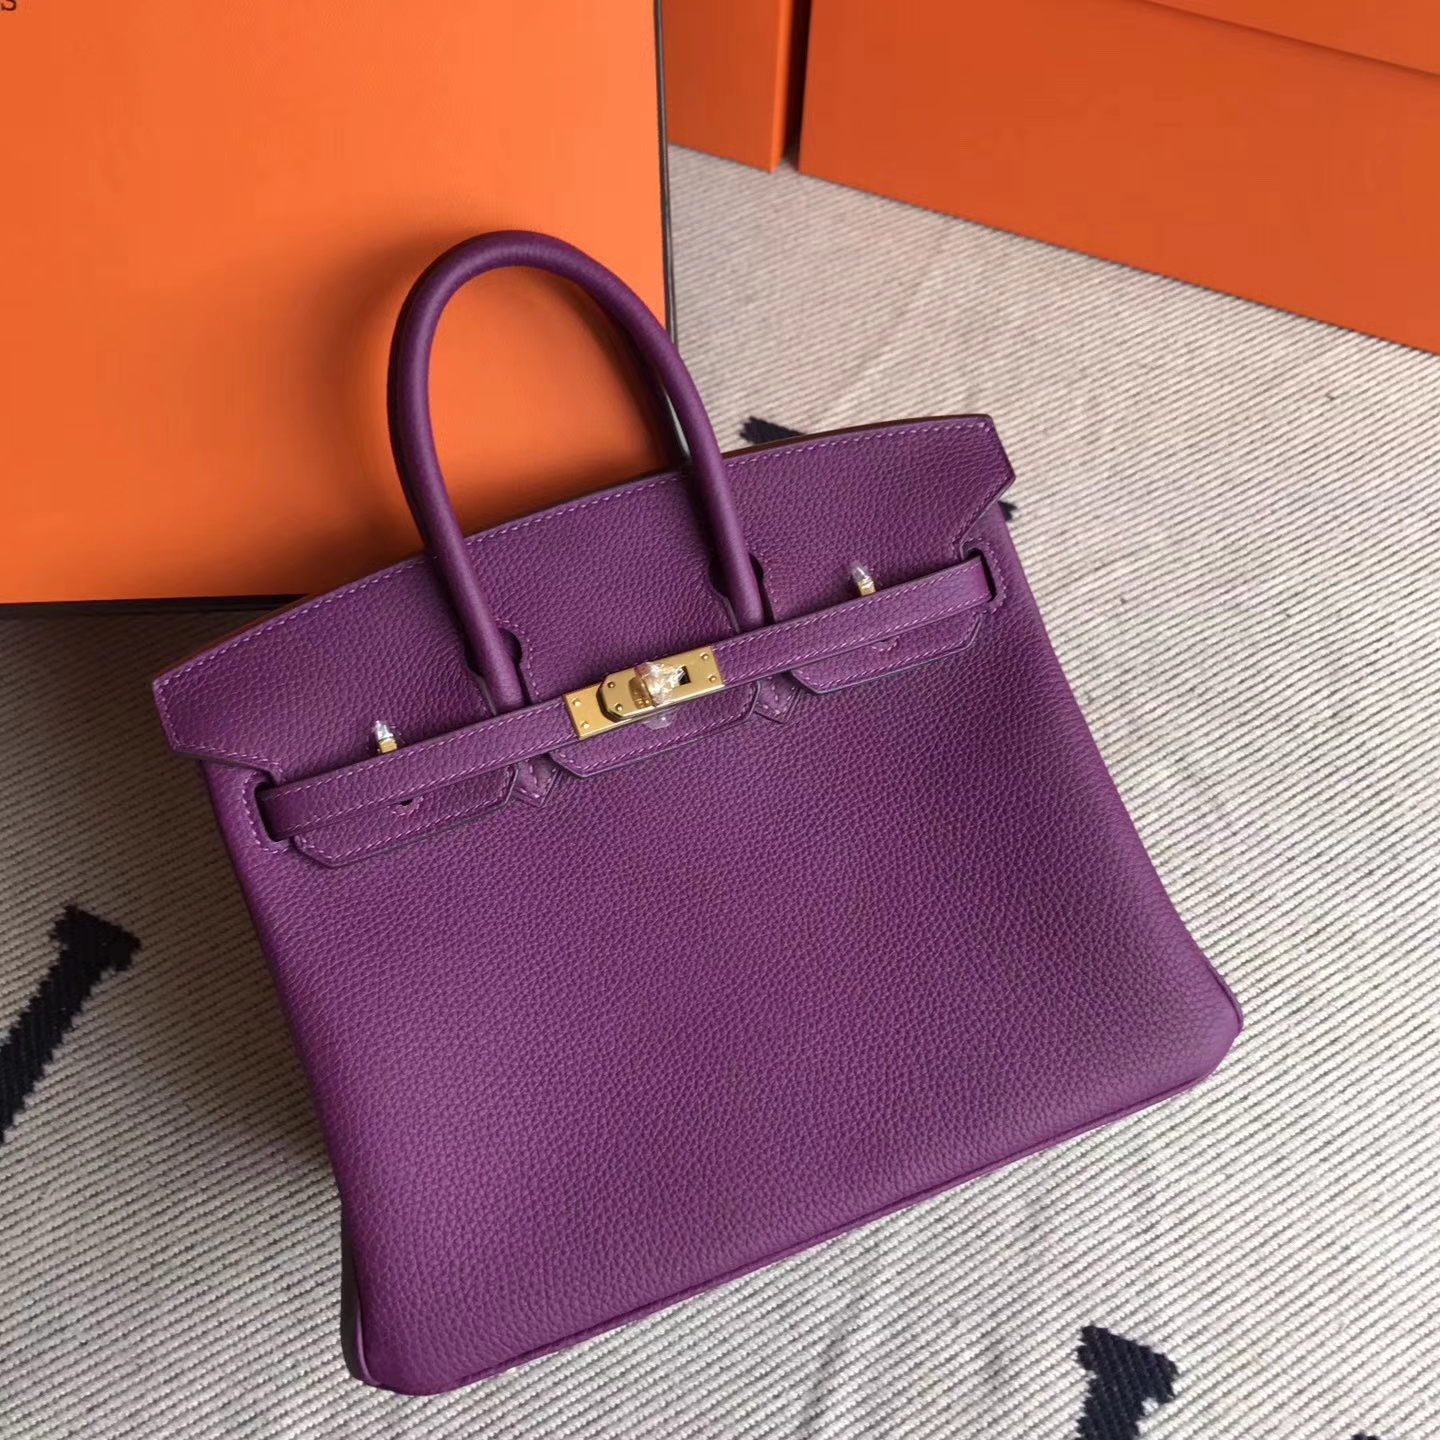 Discount Hermes P9 Amenone Purple Togo Leather Birkin25cm Bag